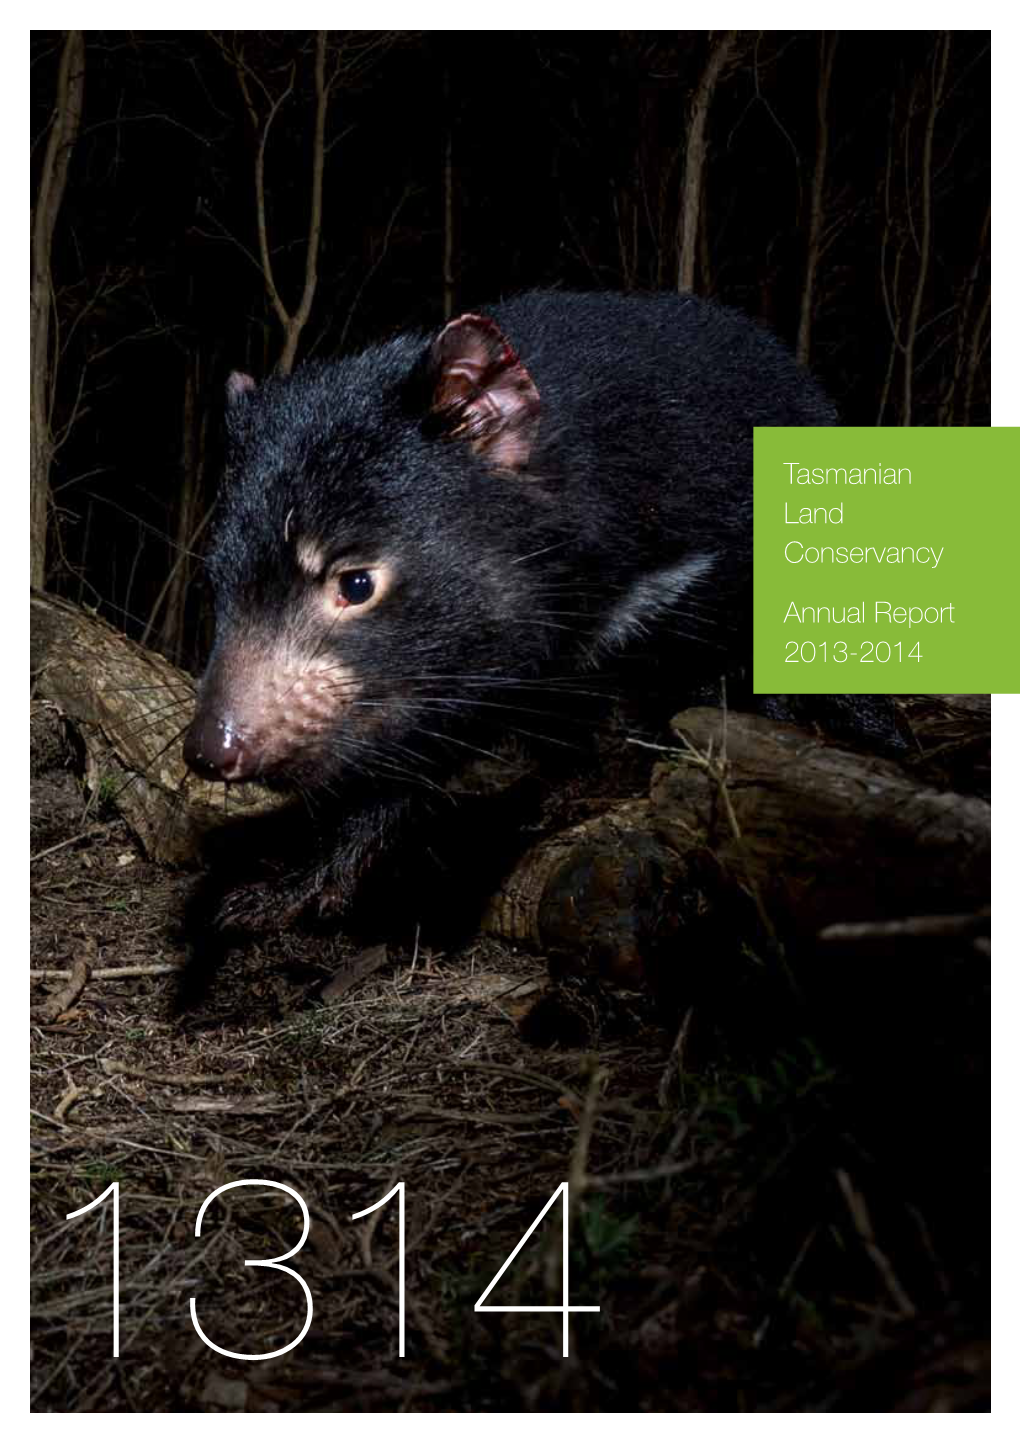 Tasmanian Land Conservancy Annual Report 2013-2014